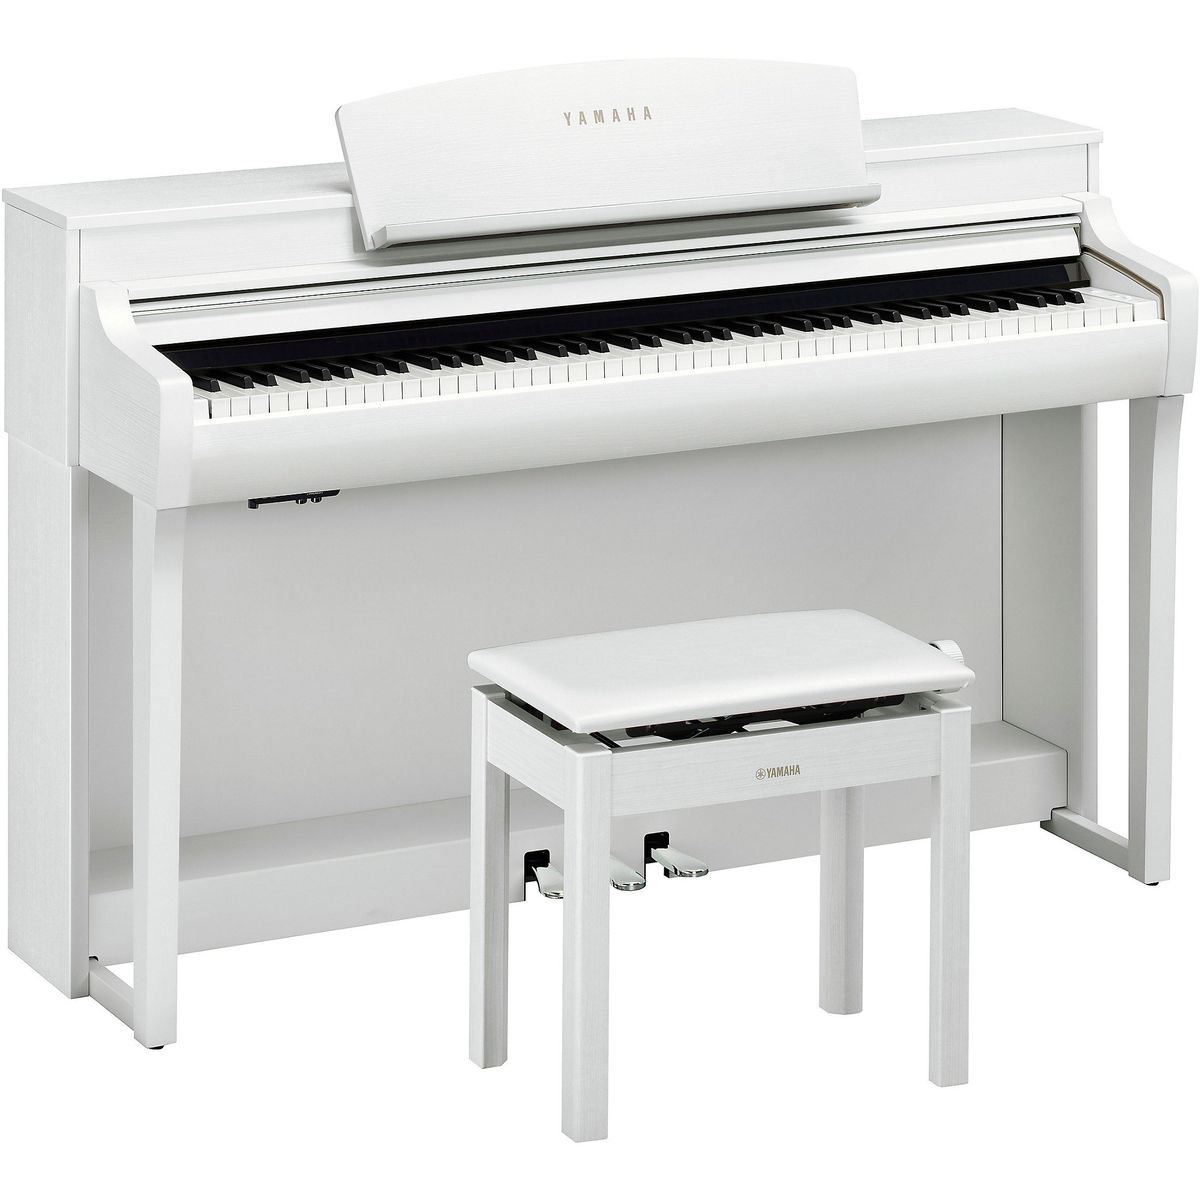 Цифровые пианино Yamaha CSP-255WH (банкетка в комплекте) ампула 37 ключи мелодика пианика пианино клавиатура гармоника рот орган